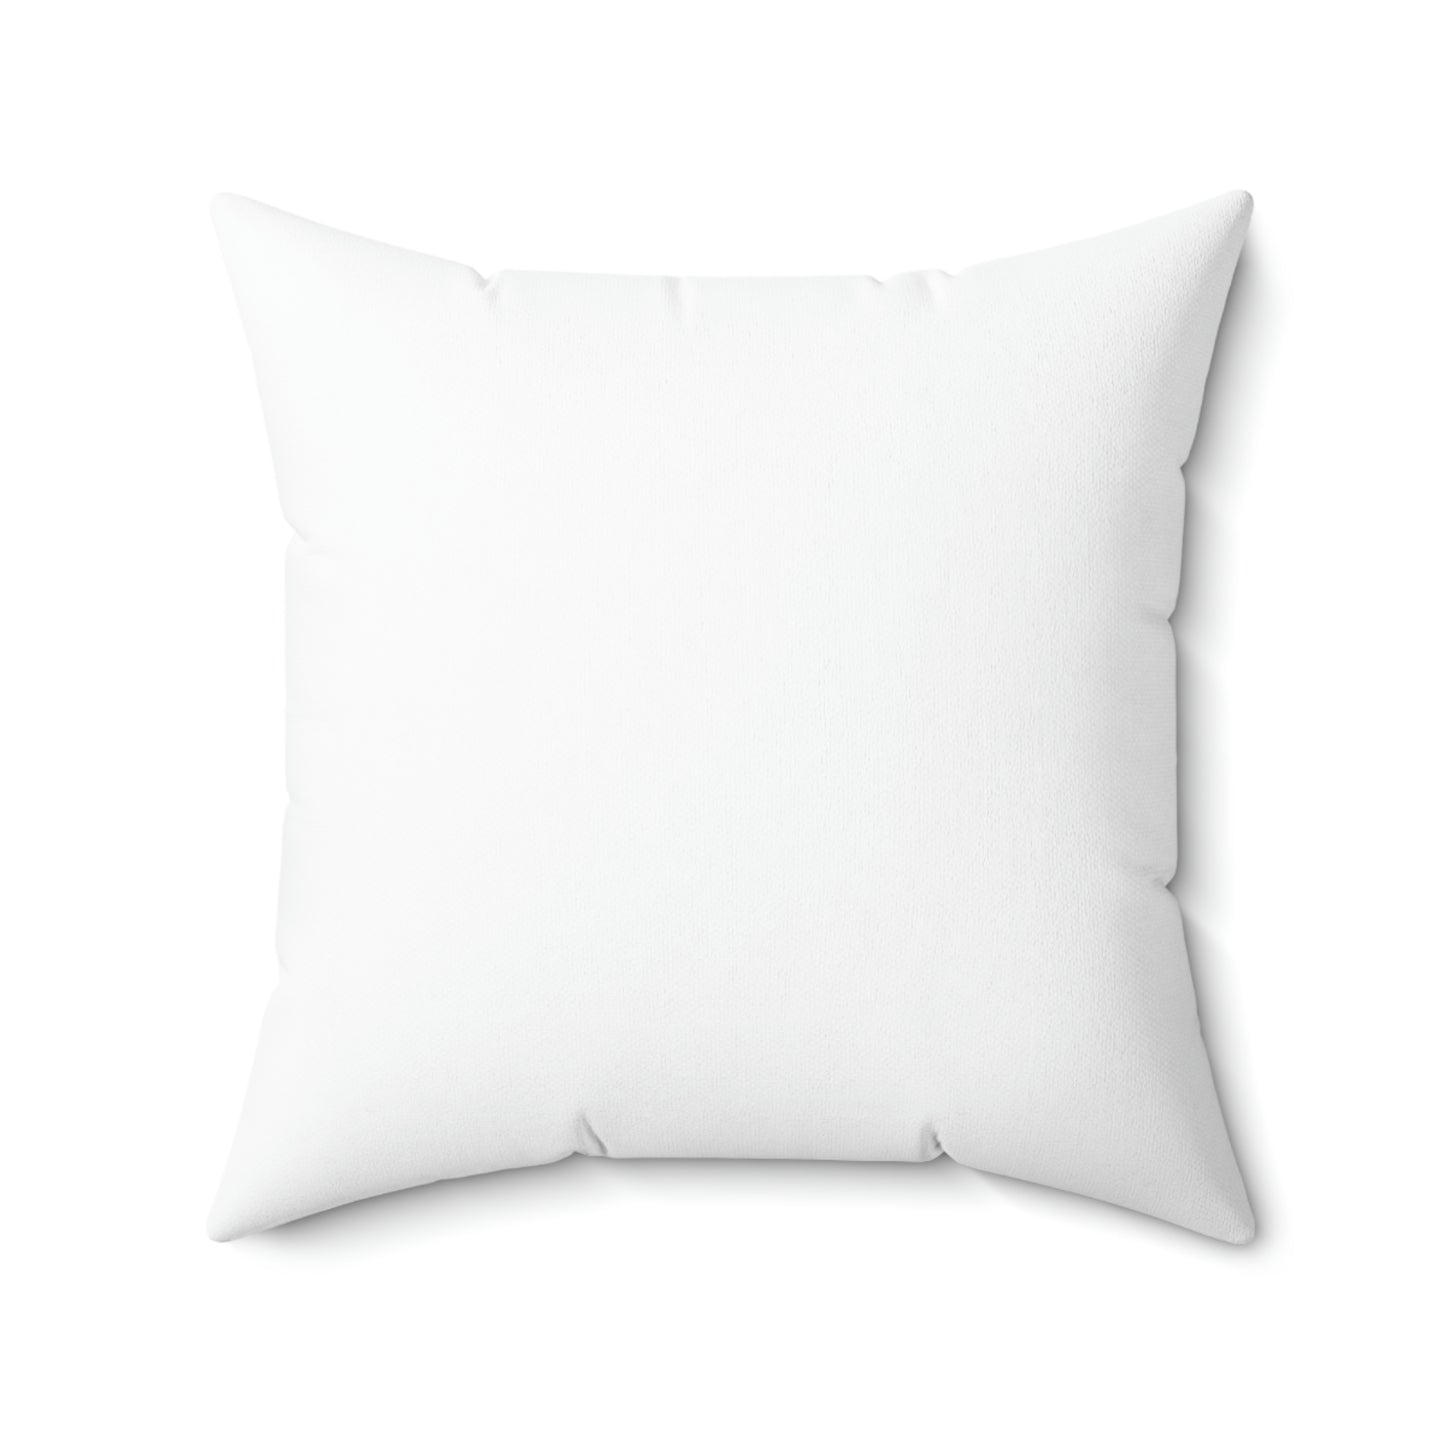 Spun Polyester Square Pillow Case “Pooh on White”